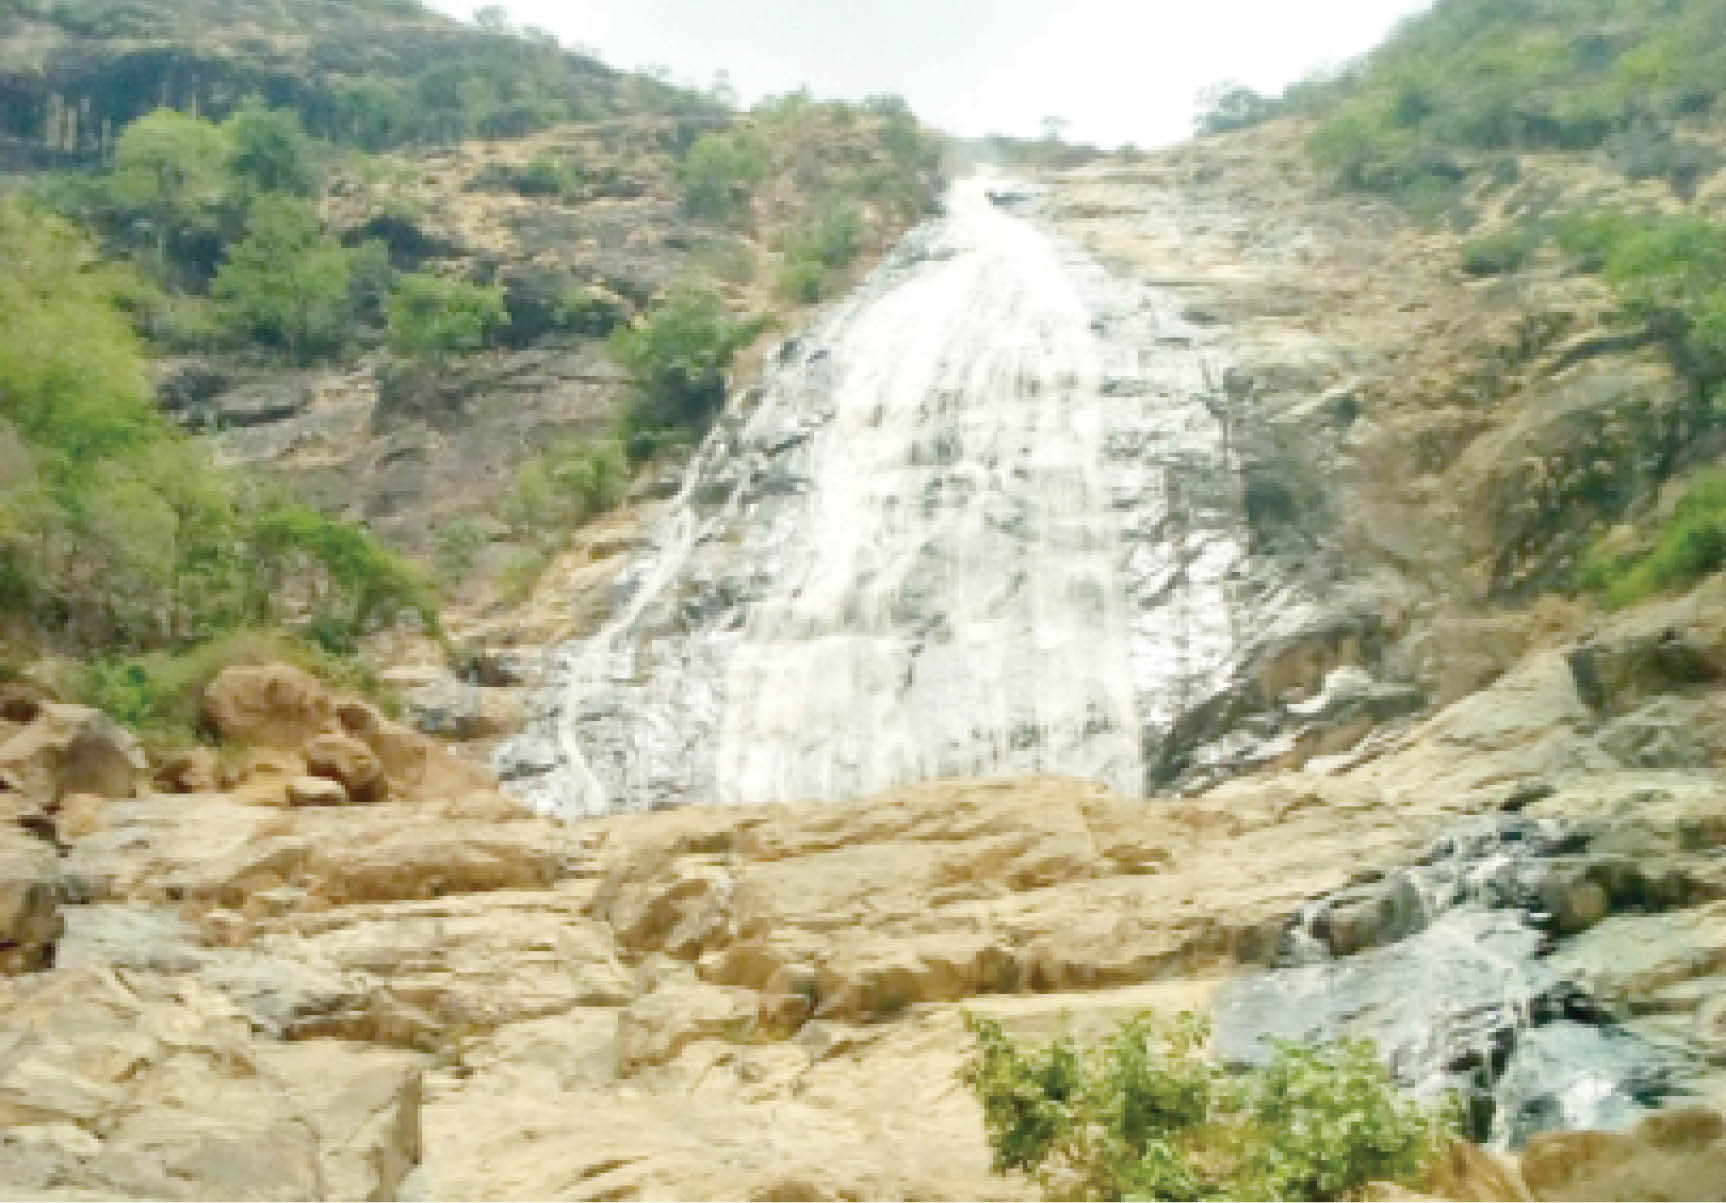 Farin Ruwa Waterfall: Where humans, animals enjoy nature - Daily Trust